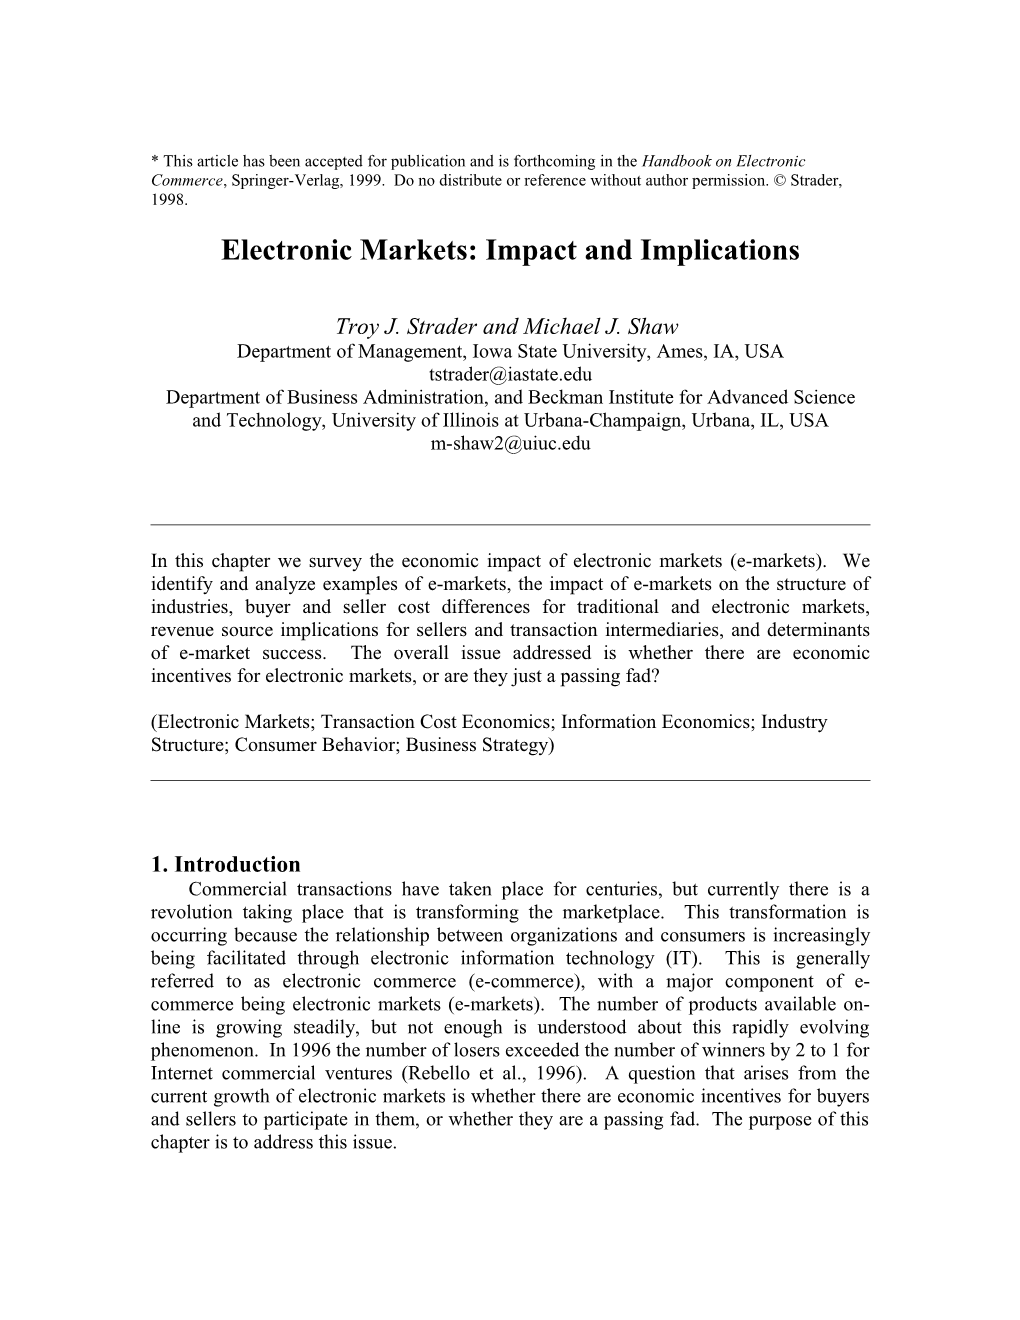 Characteristics Of Electronic Markets